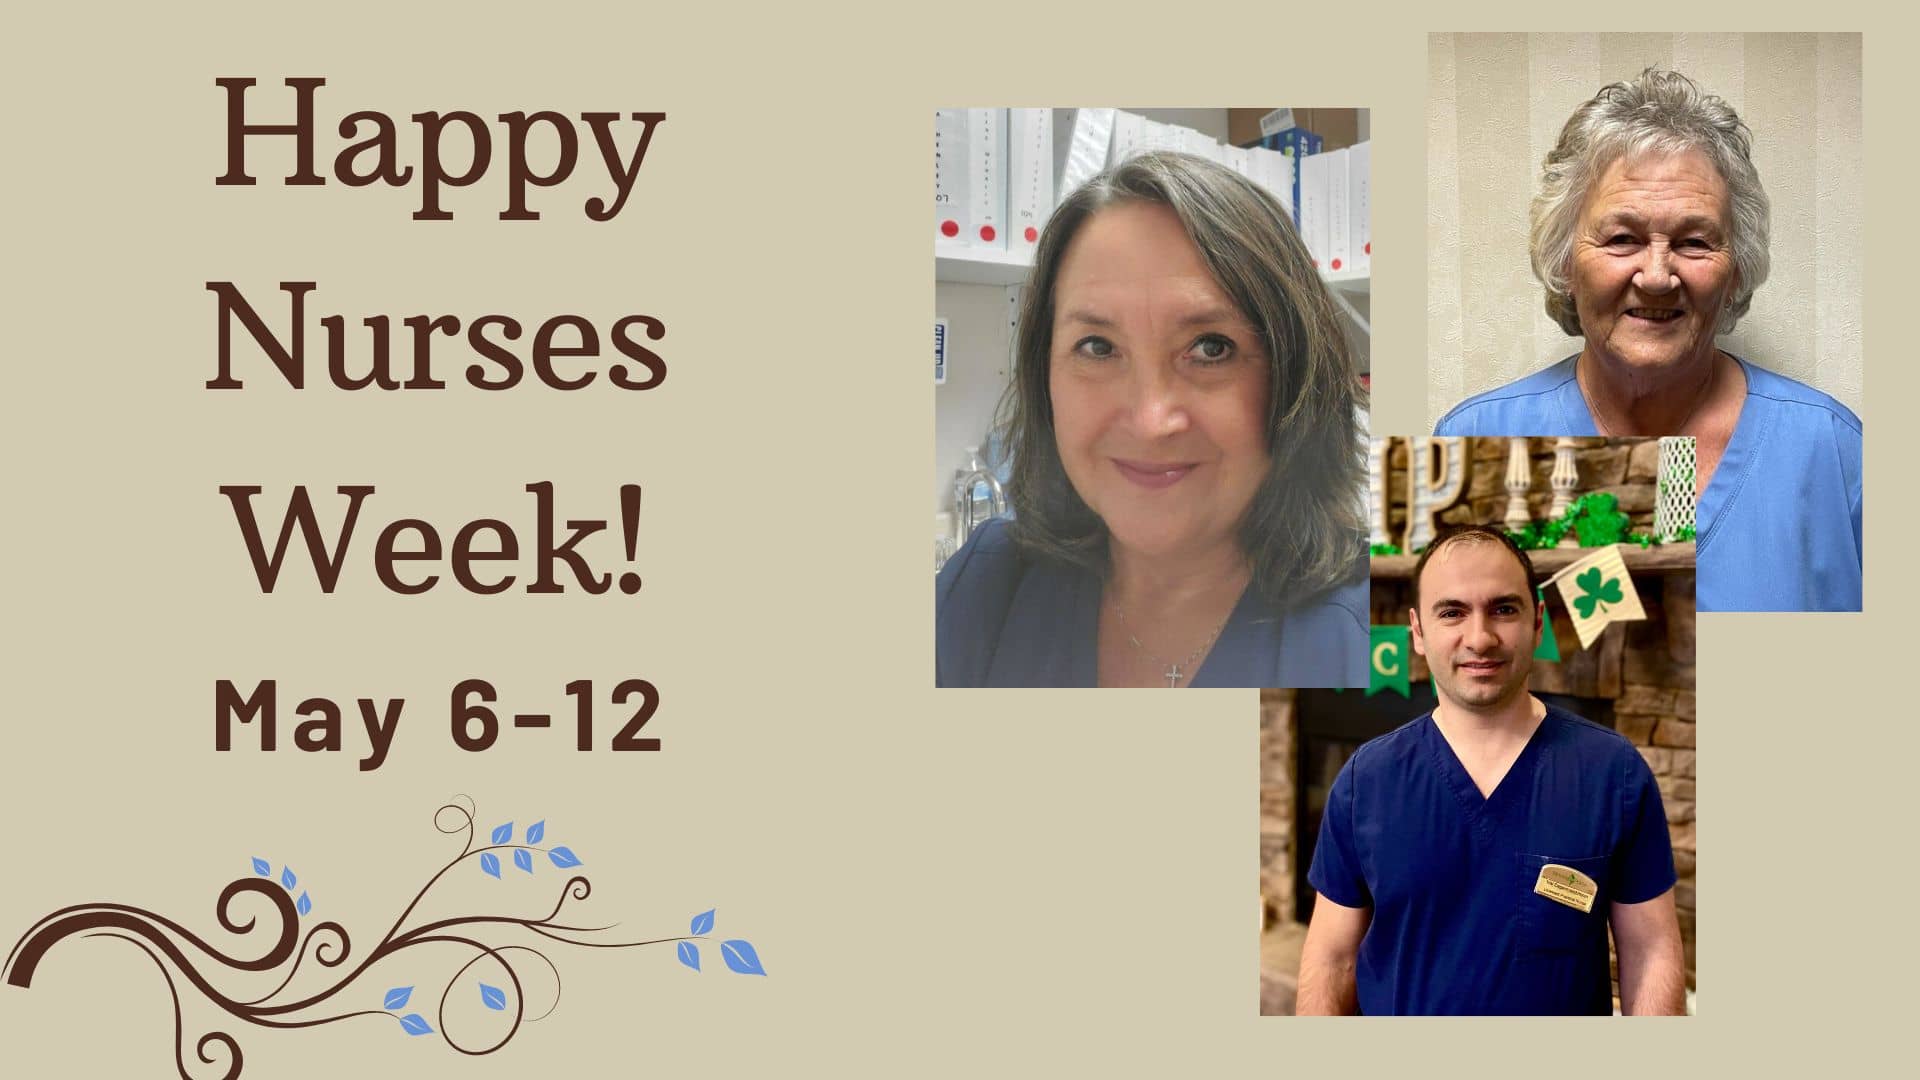 Happy Nurses Week floor nurses image